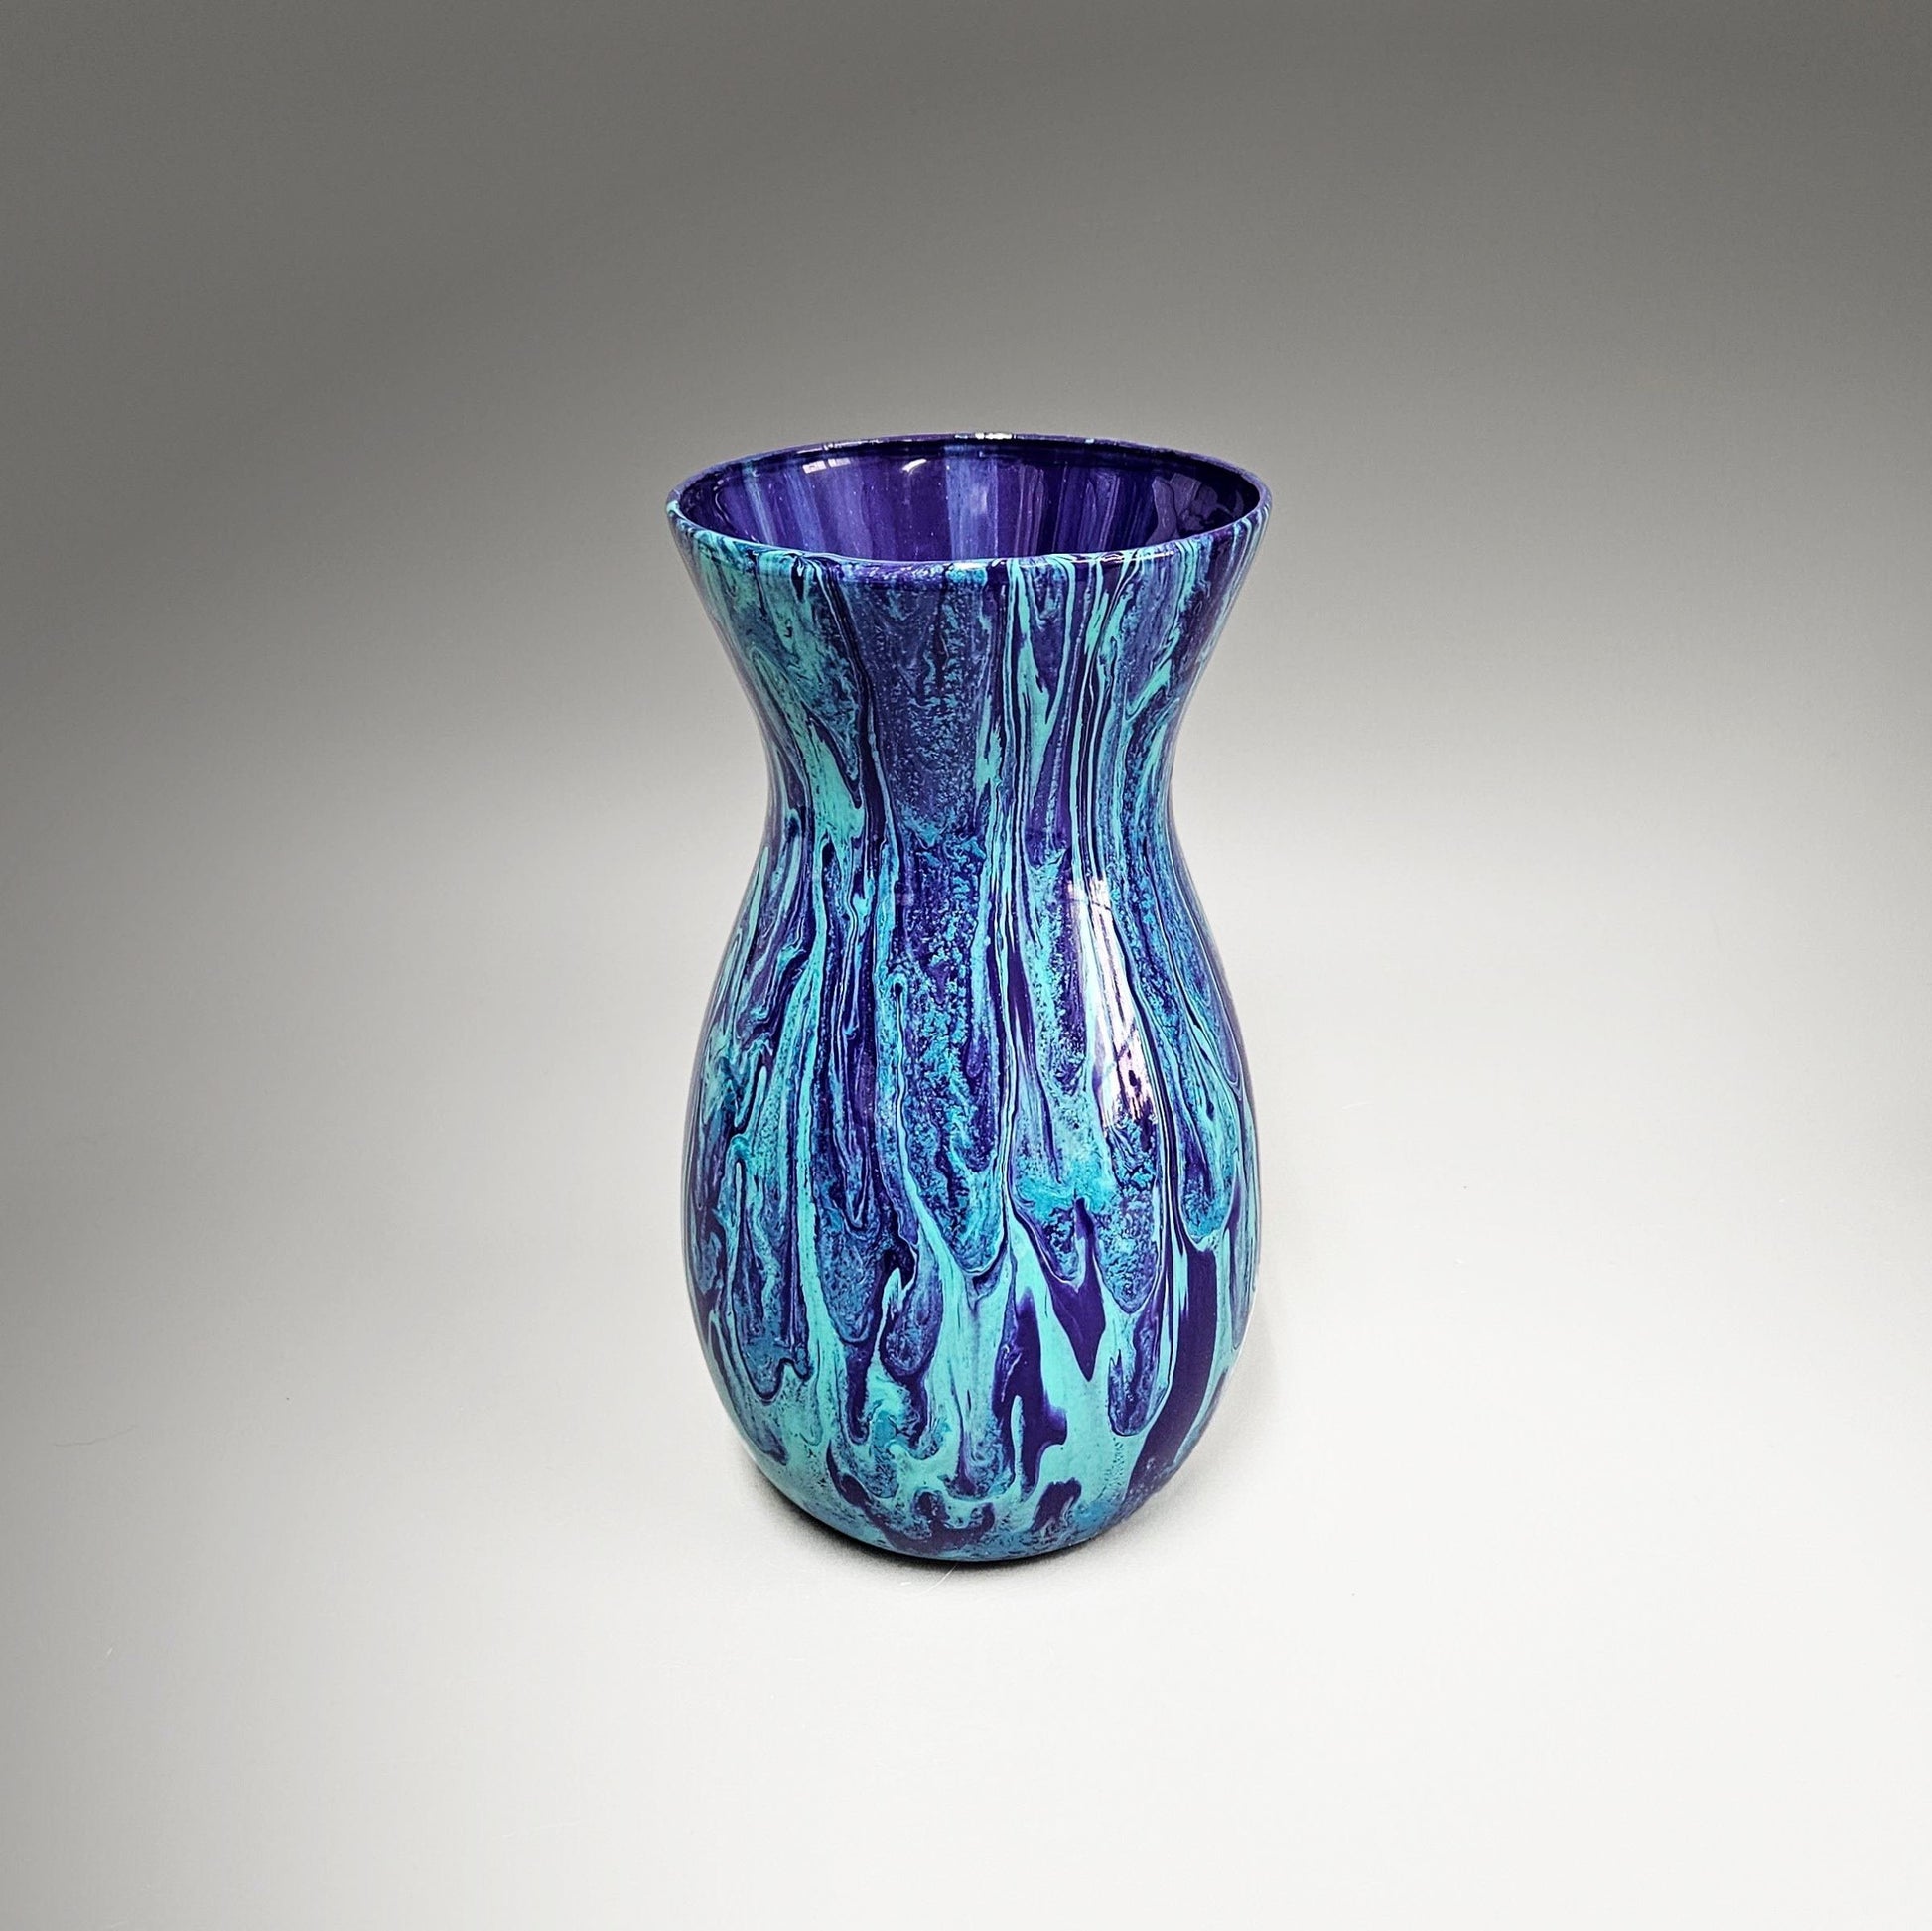 Fluid Art Painted Vase in Aqua and Purple | Unique Home Décor Gifts